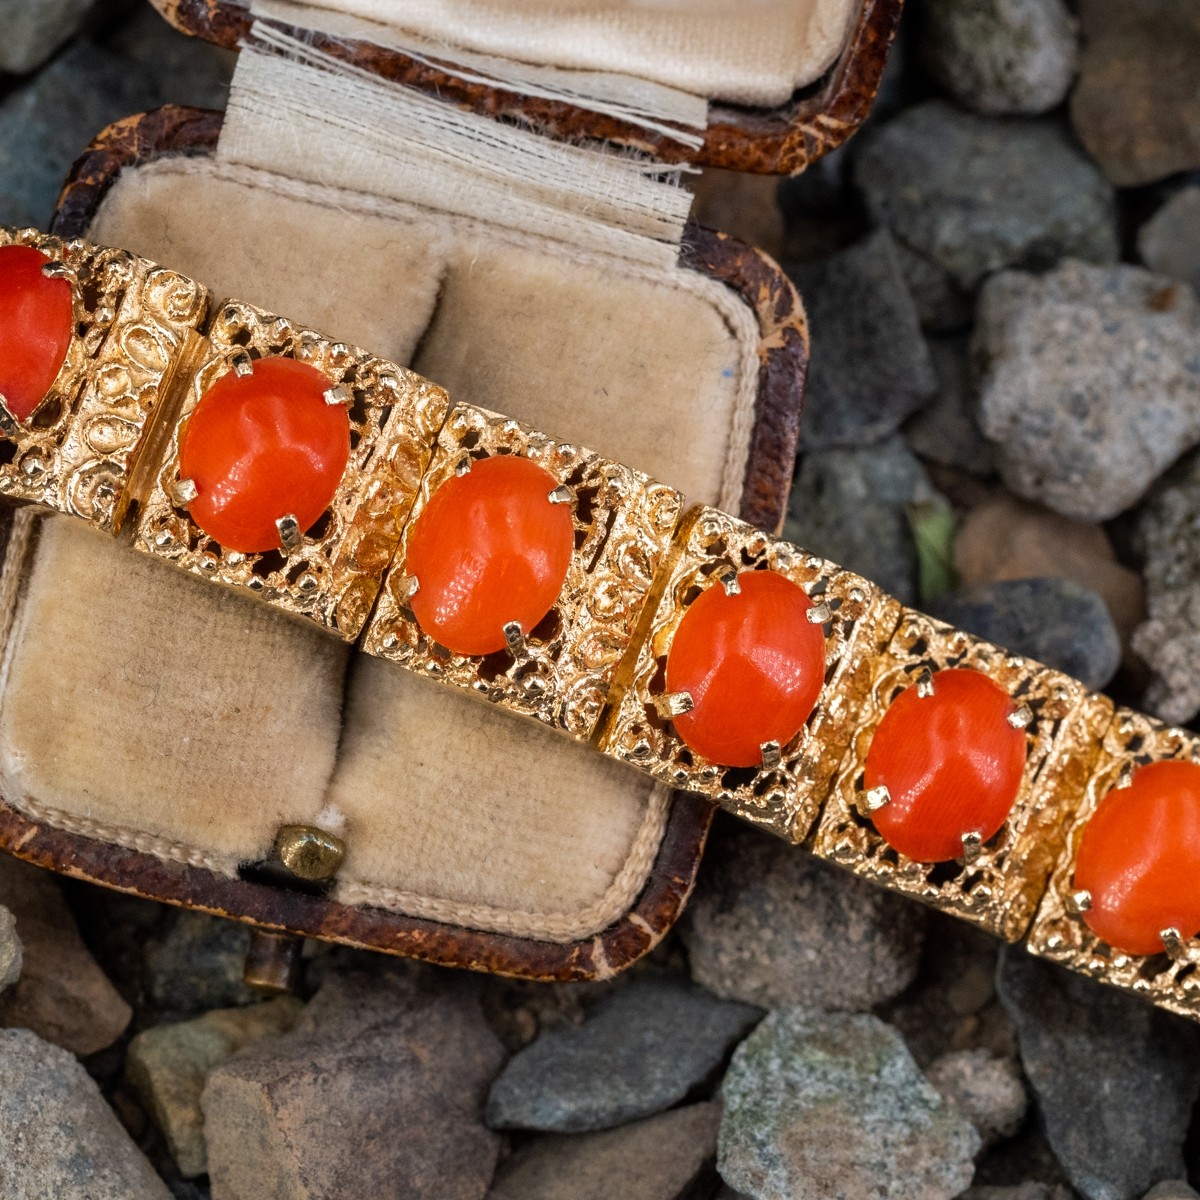 Buy Antique Carved Coral Sterling Silver Bracelet Online in India - Etsy